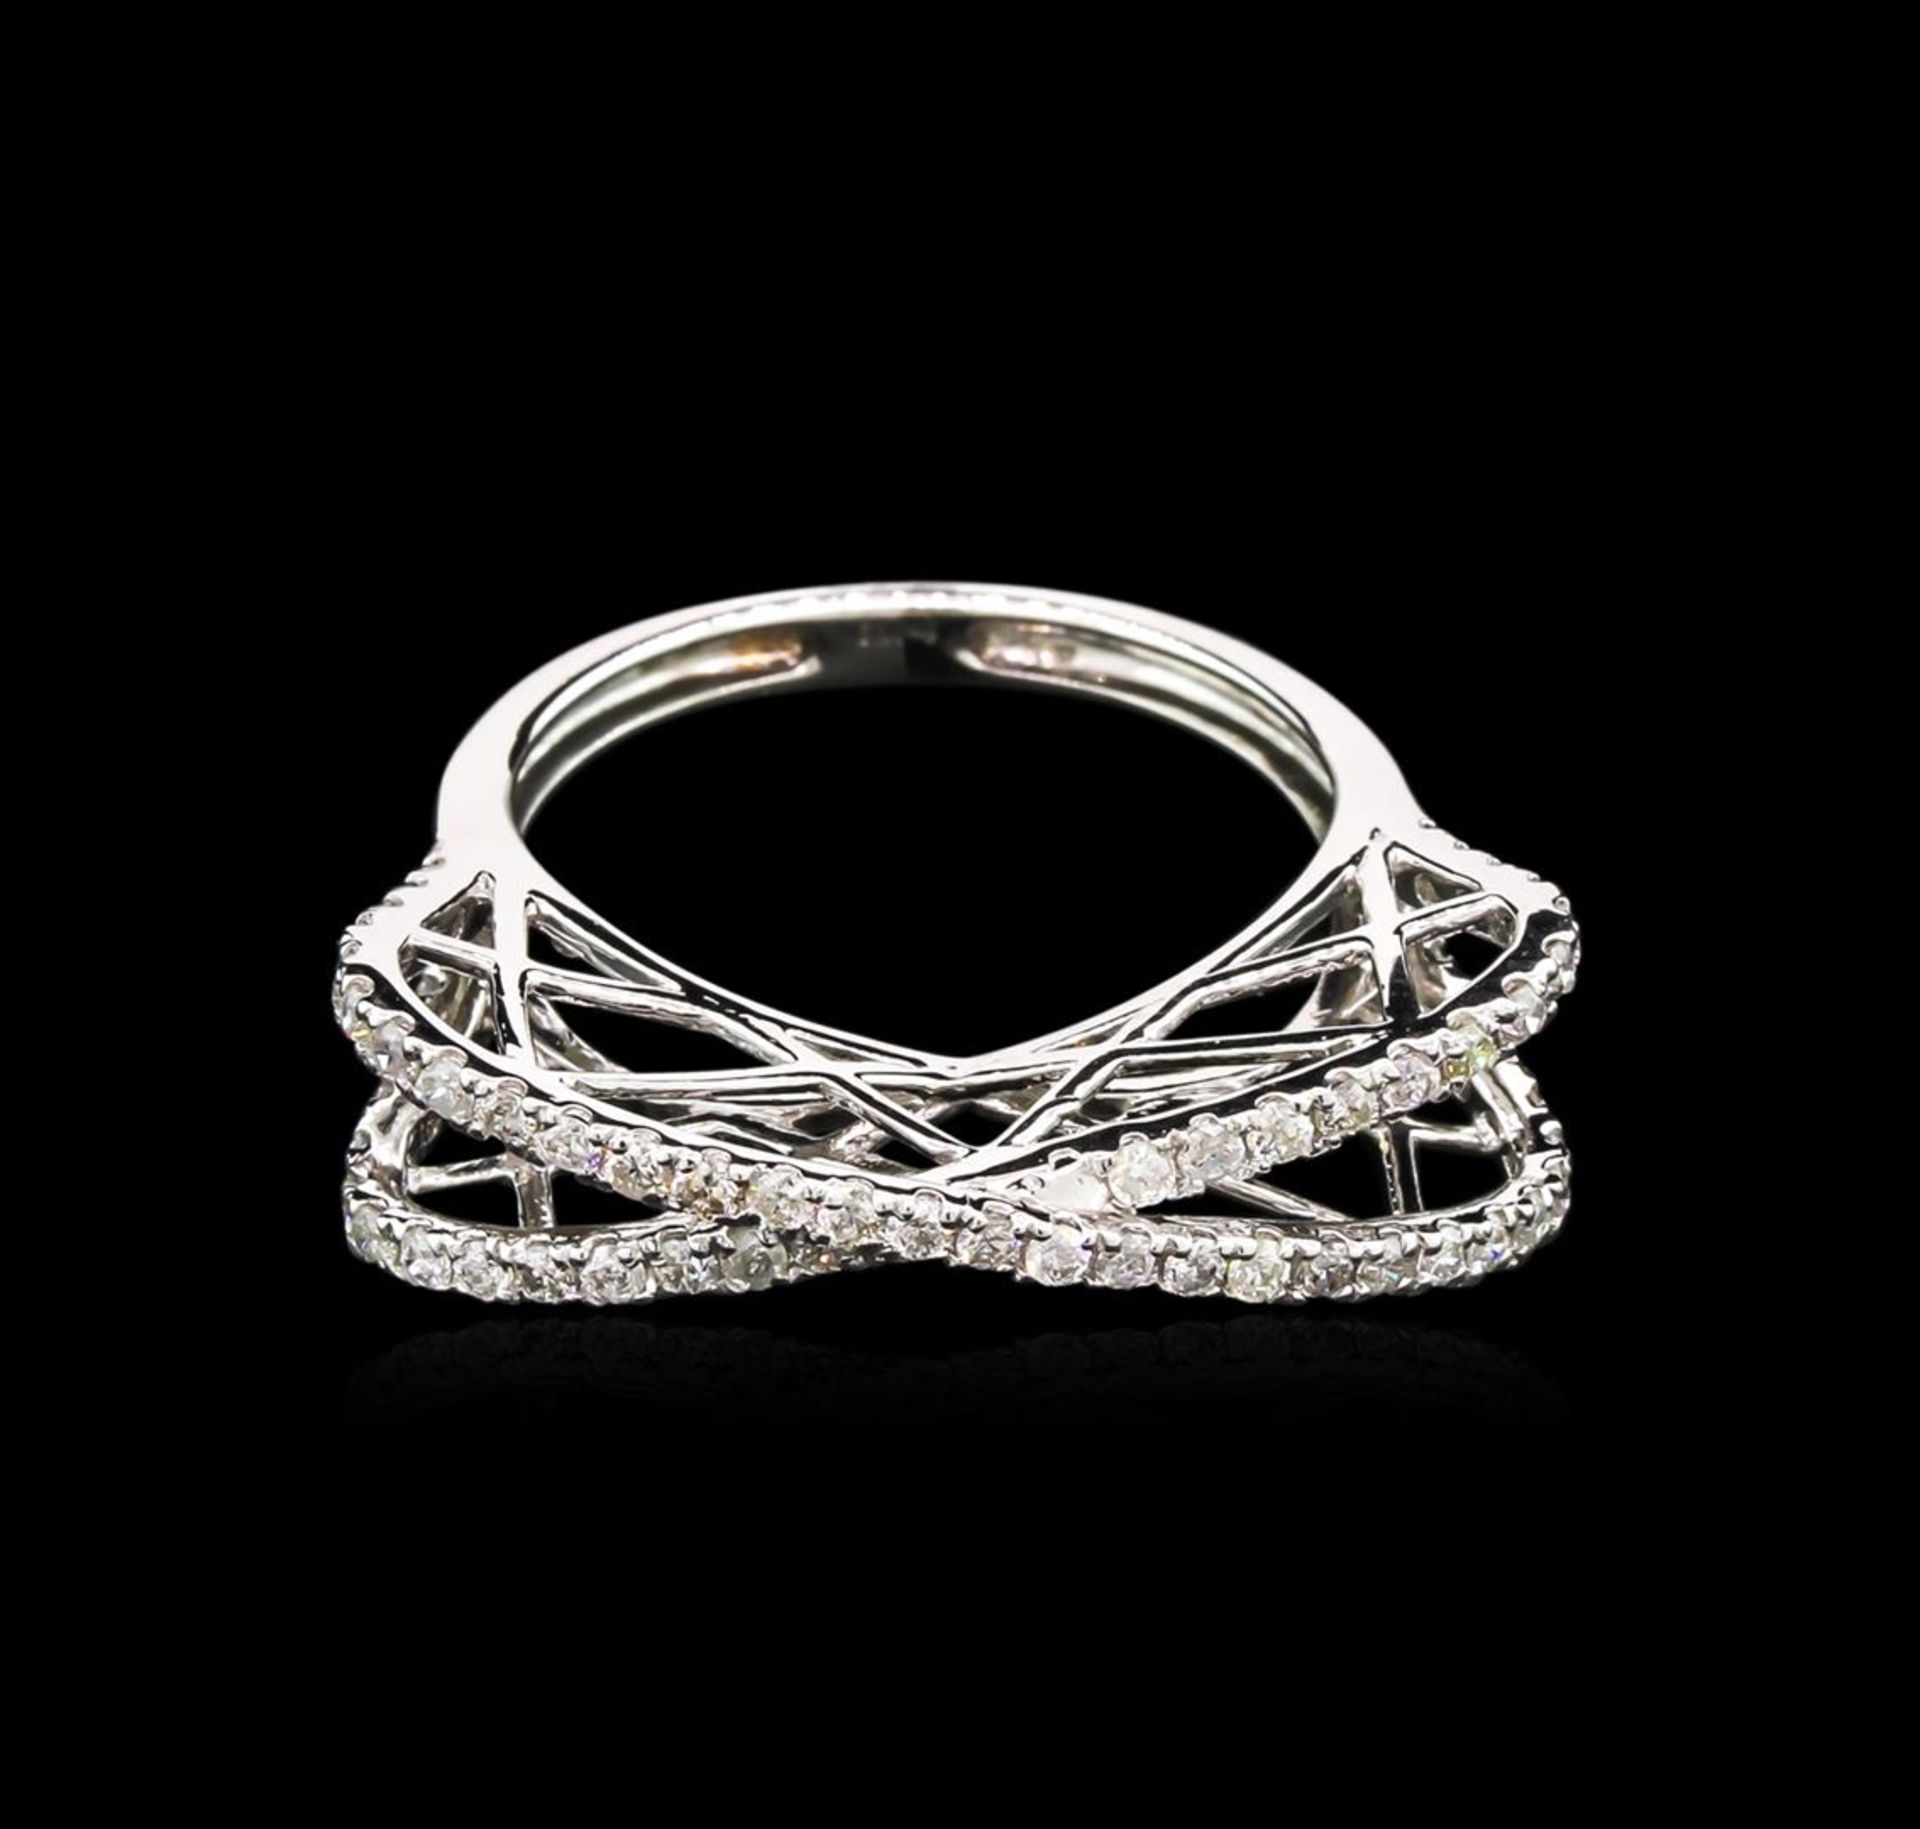 0.62ctw Diamond Ring - 14KT White Gold - Image 2 of 2